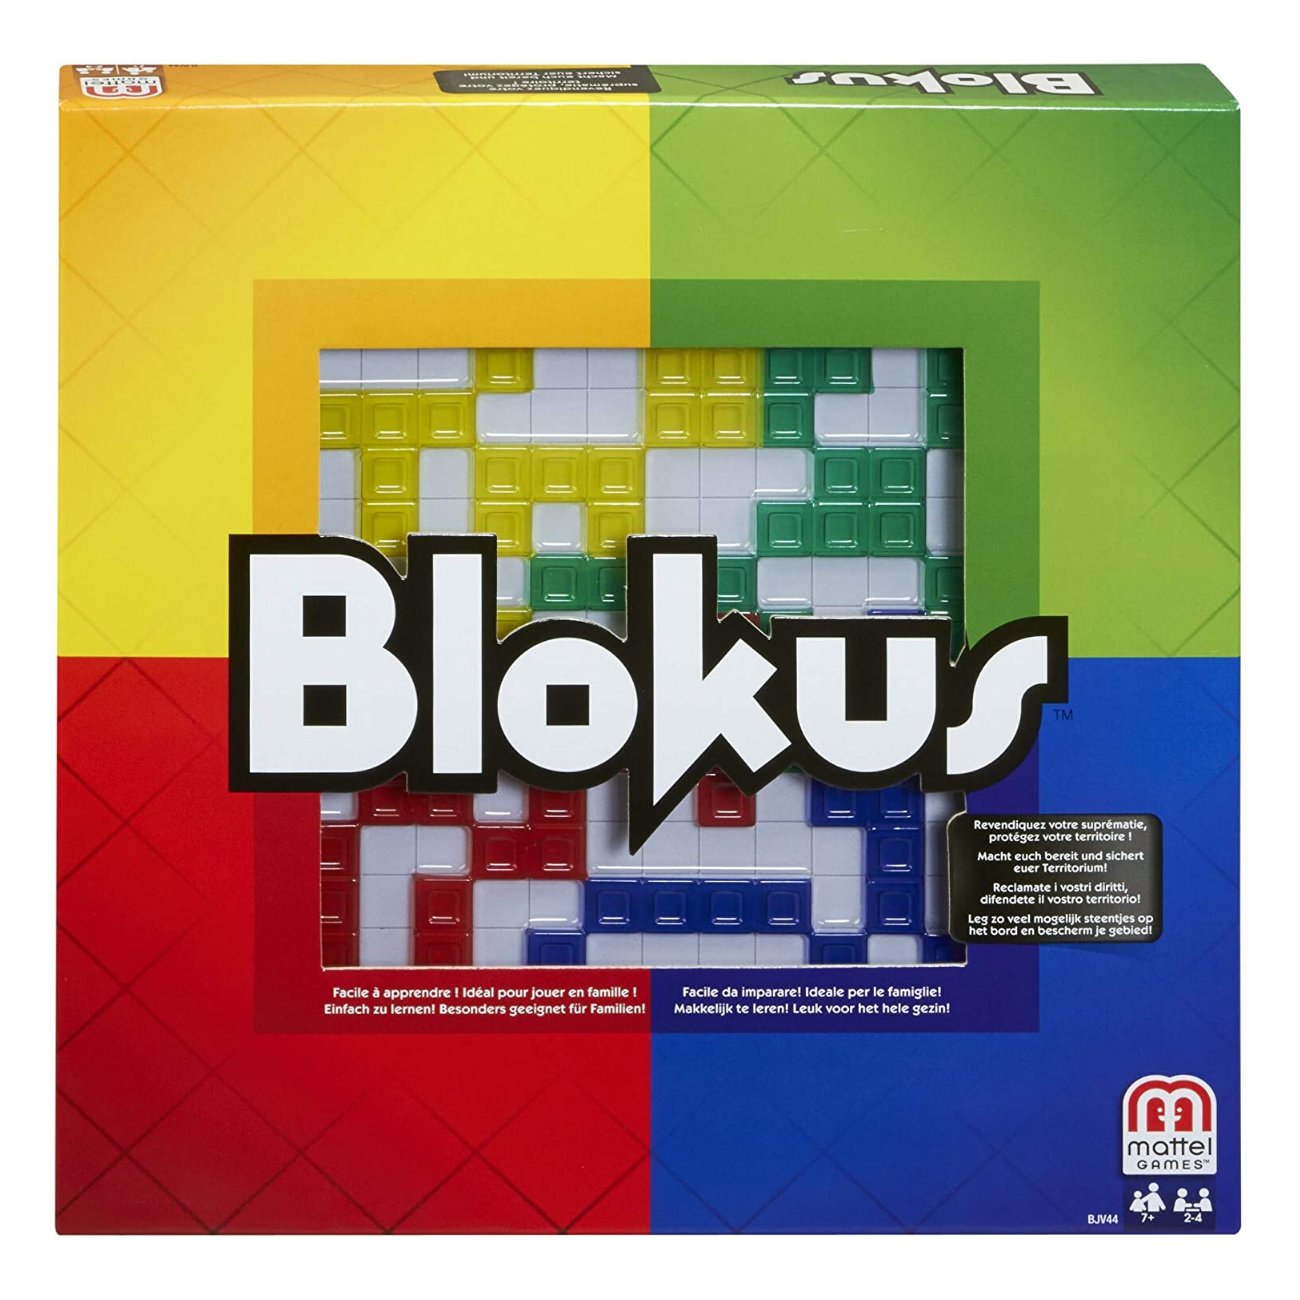 How Blokus Works